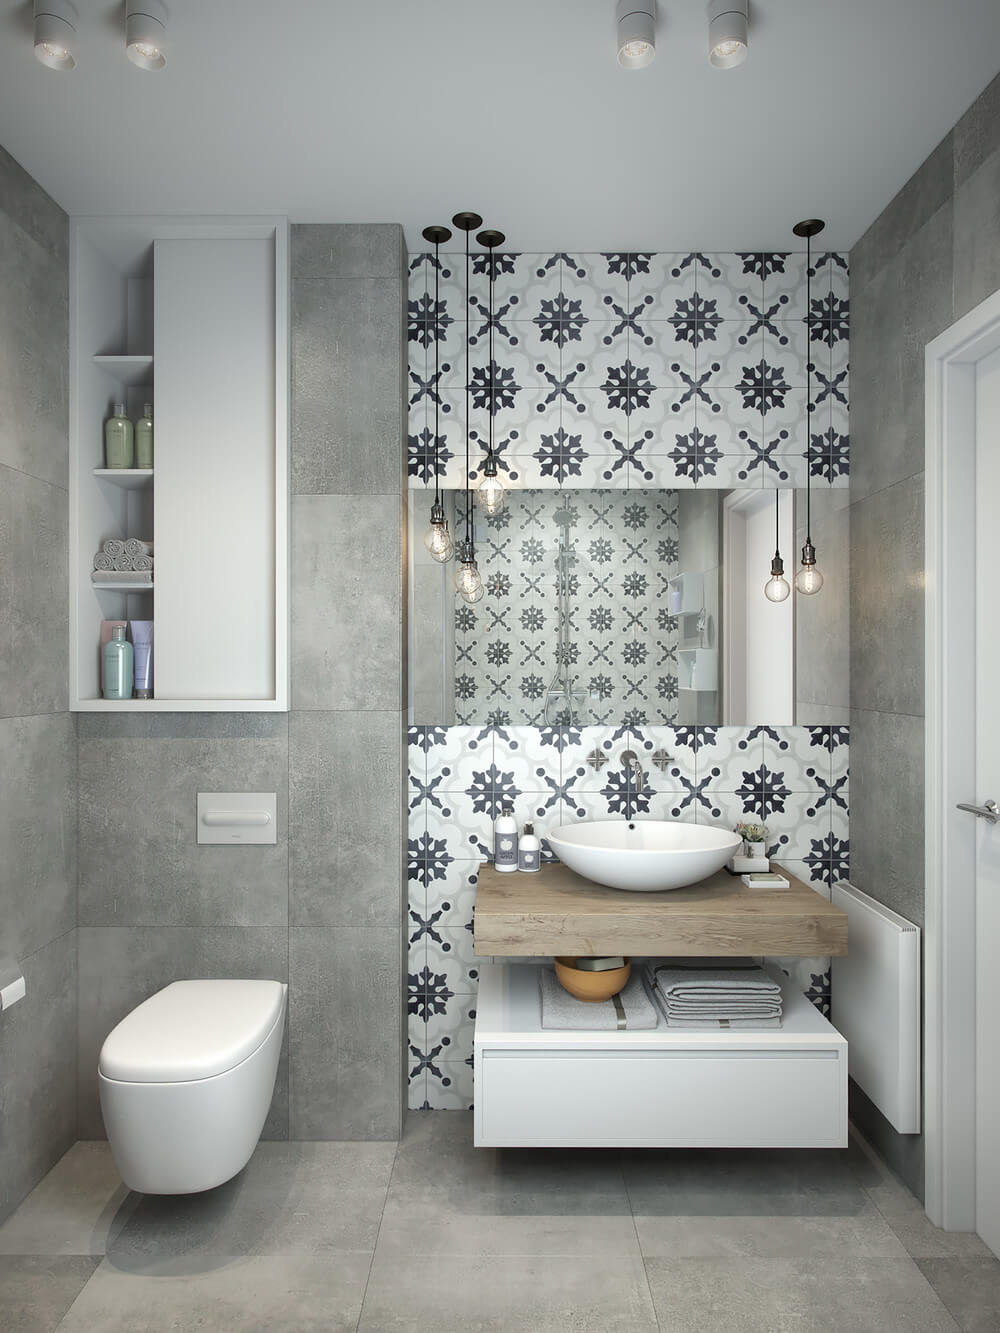 gray and white bathroom tiles